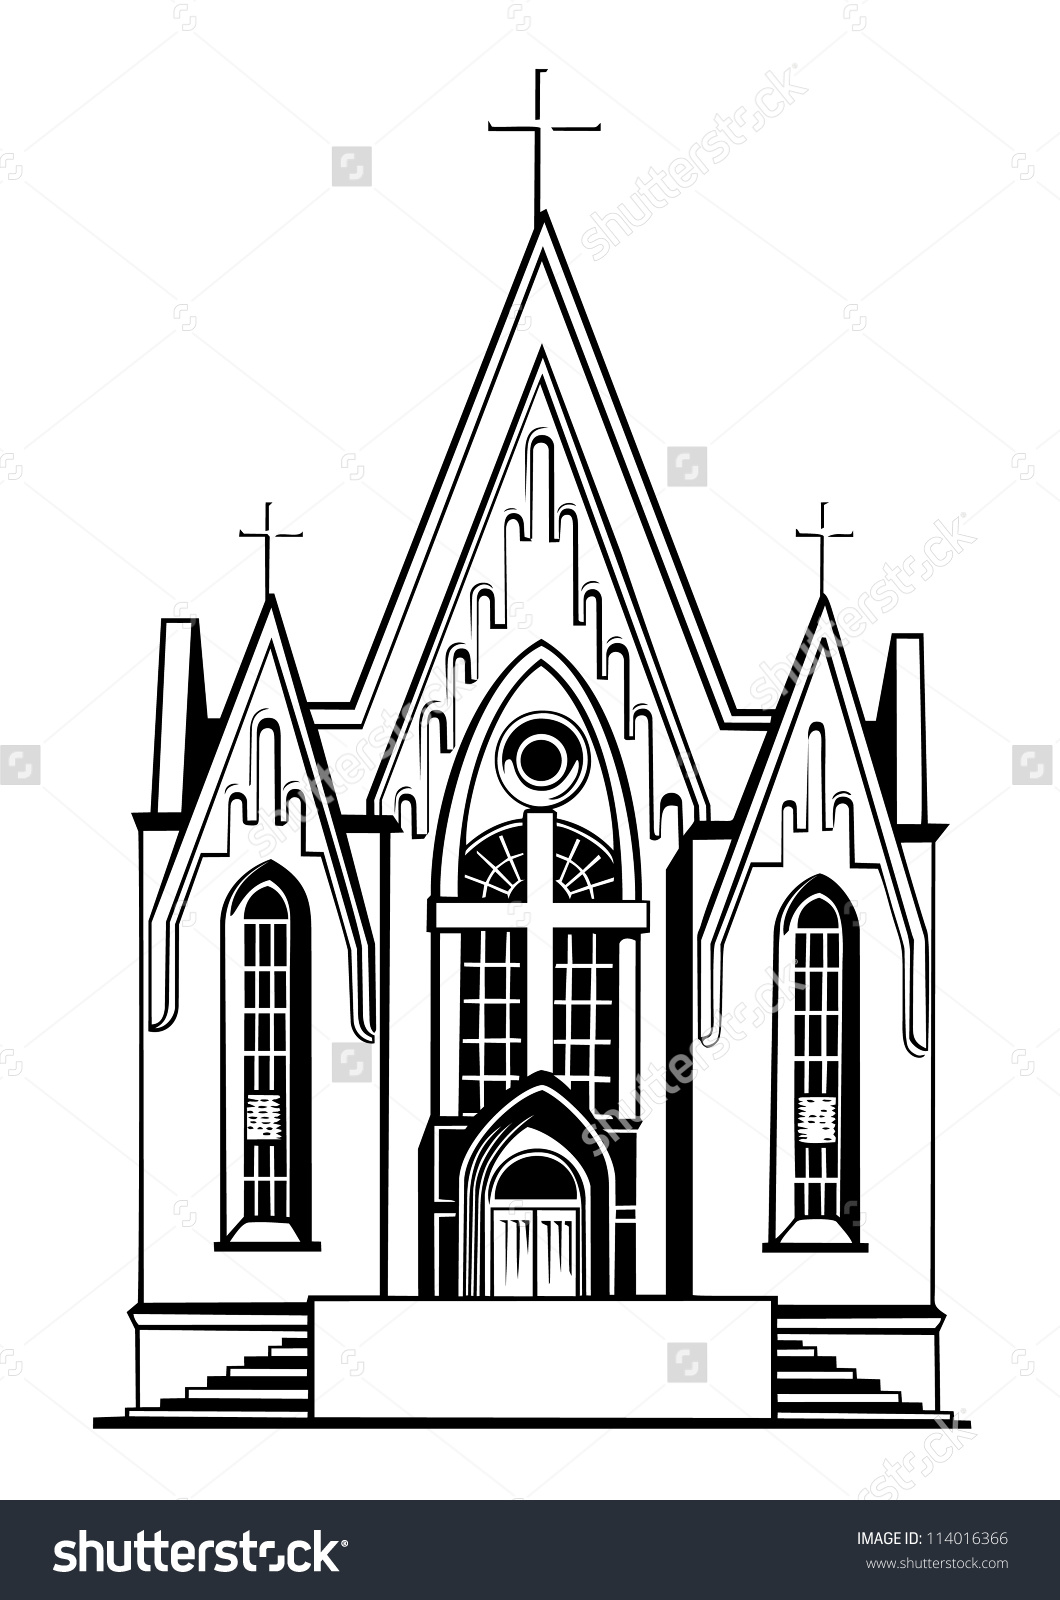 Church steeple stock vectors 